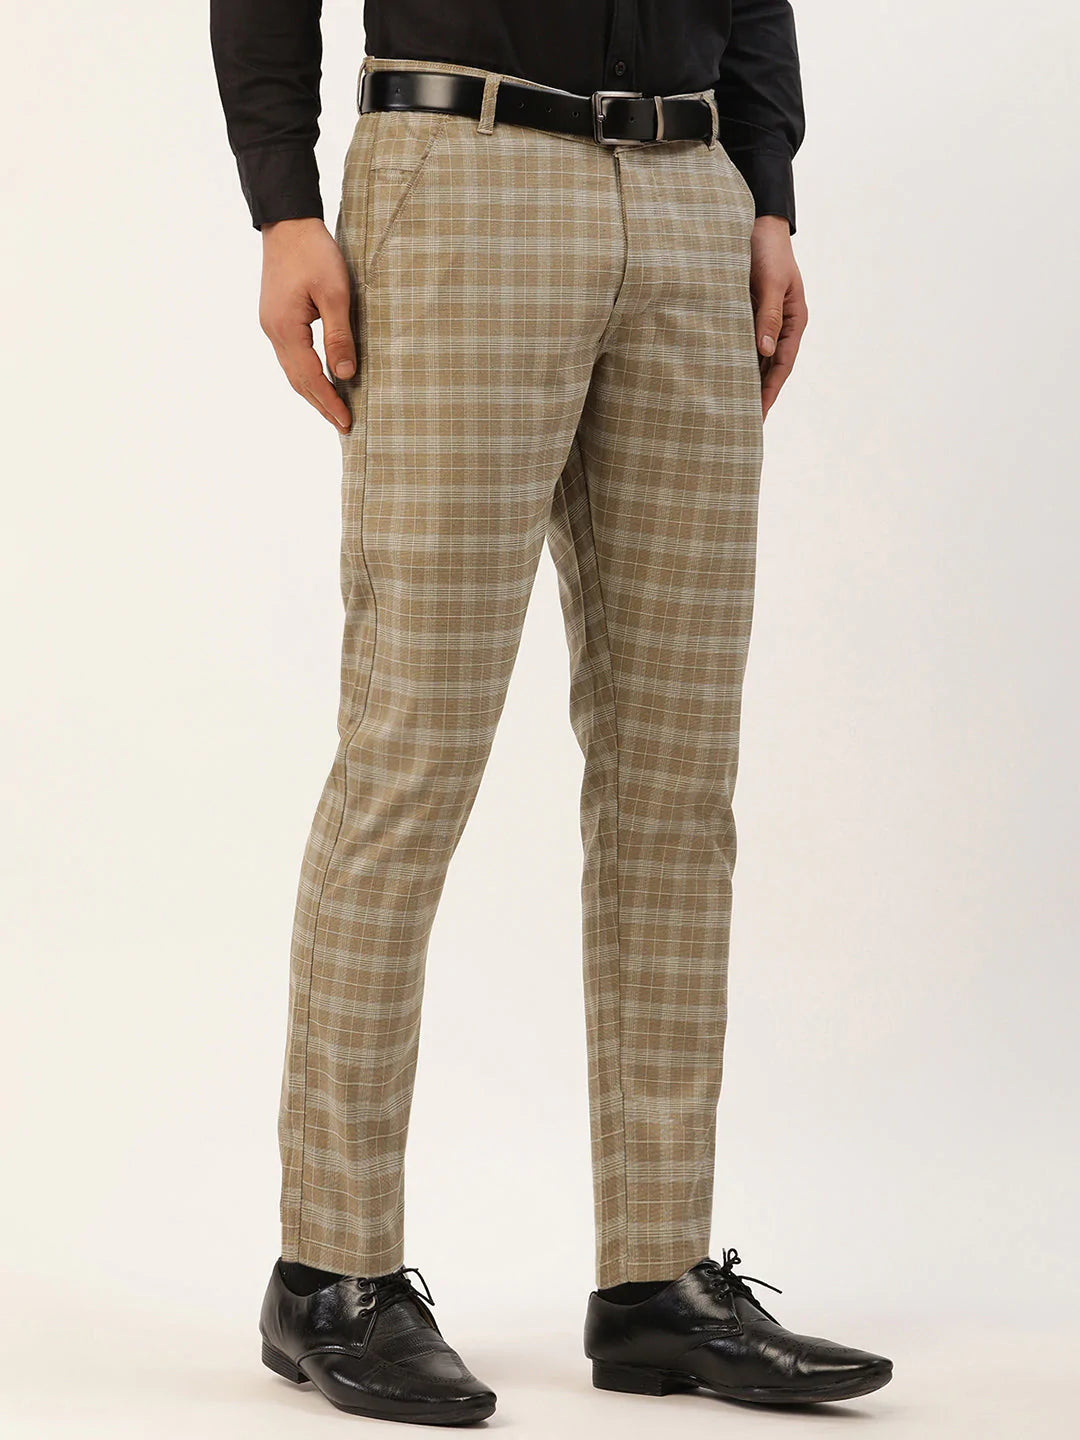 Jainish Men's Beige Tartan Checked Formal Trousers ( FGP 271 Beige )